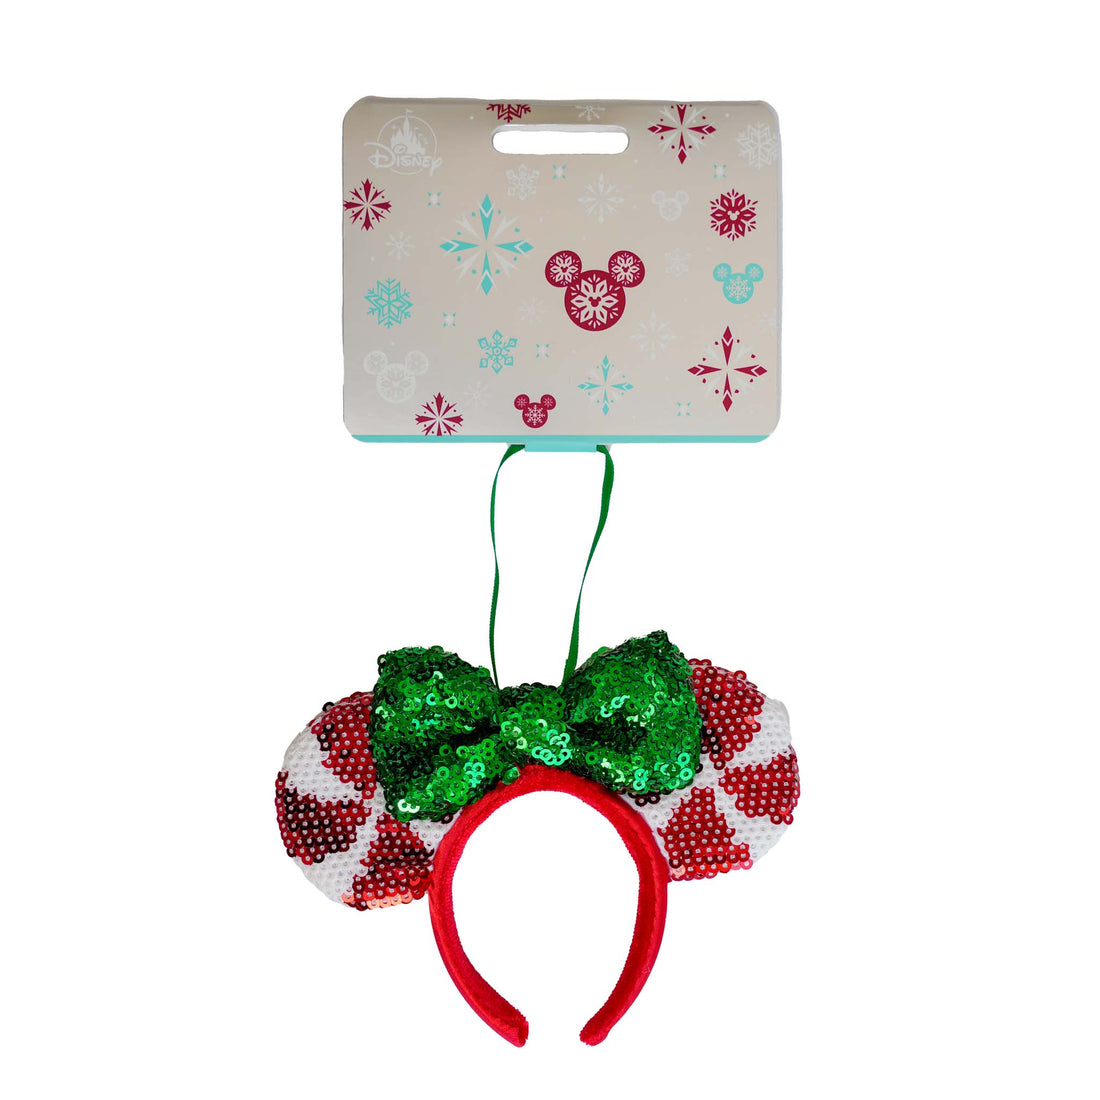 Disney Minnie Ear Christmas Decoration for Hanging